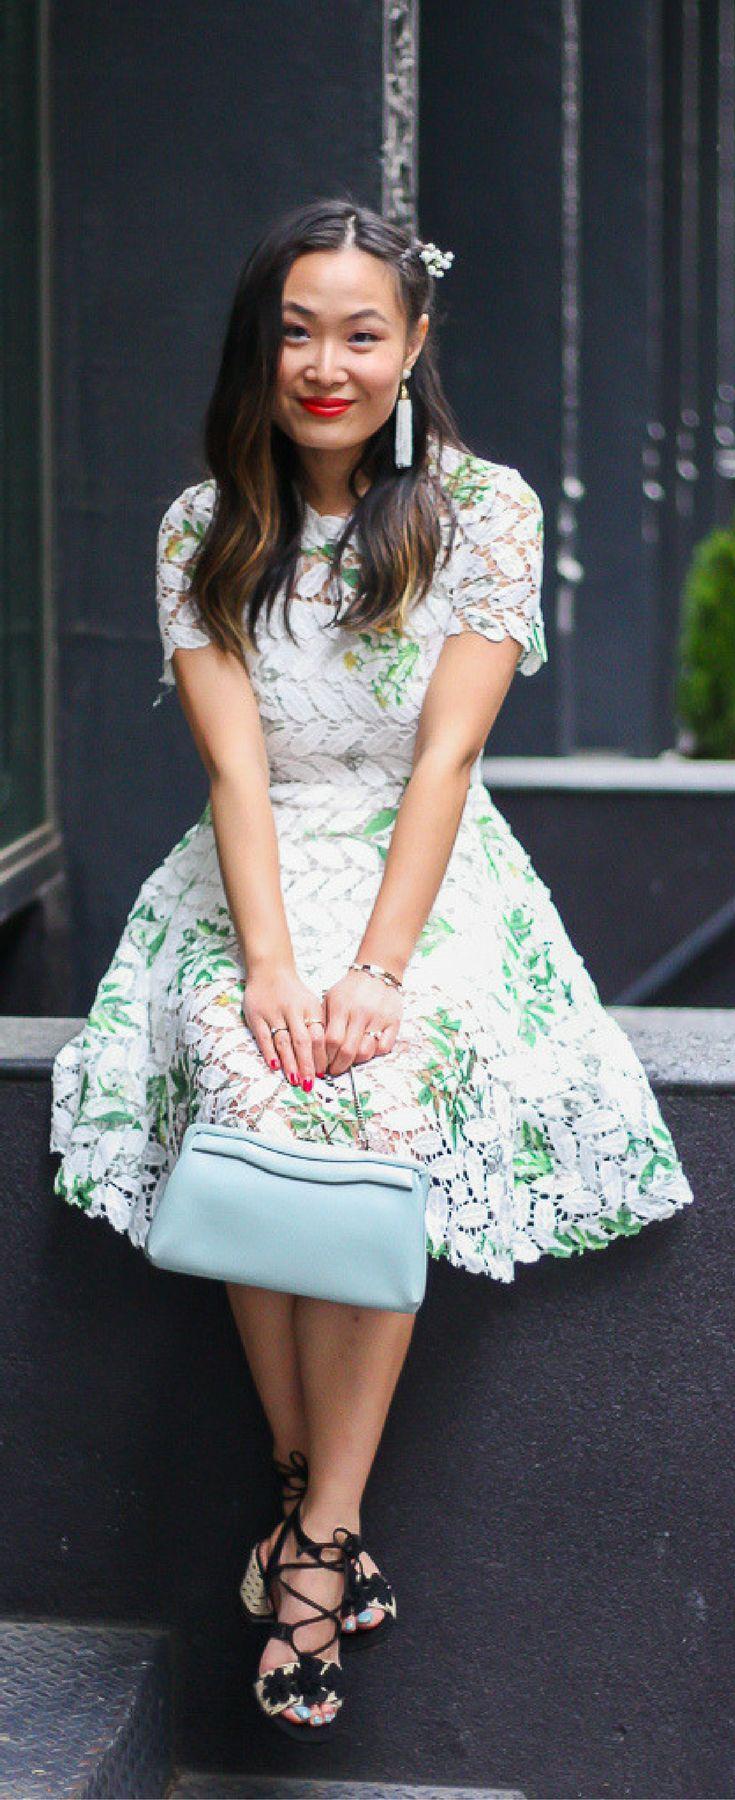 زفاف - How To Look Feminine: White Crochet Dress